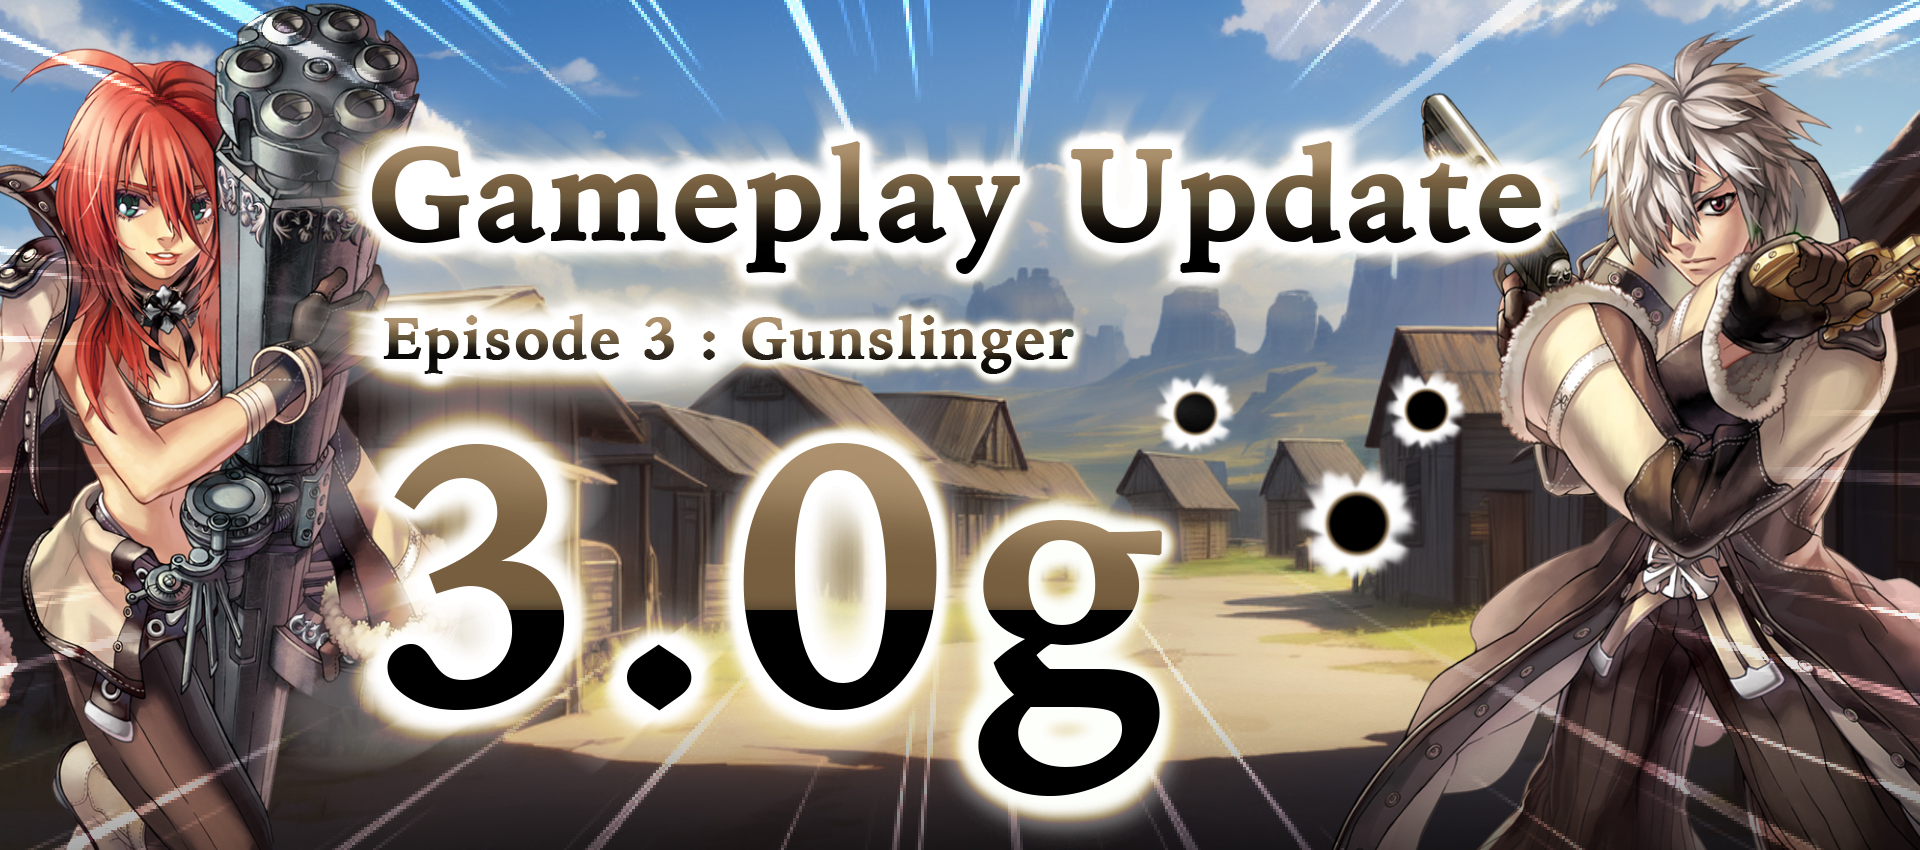 Gameplay Update 3.0g : Gunslinger